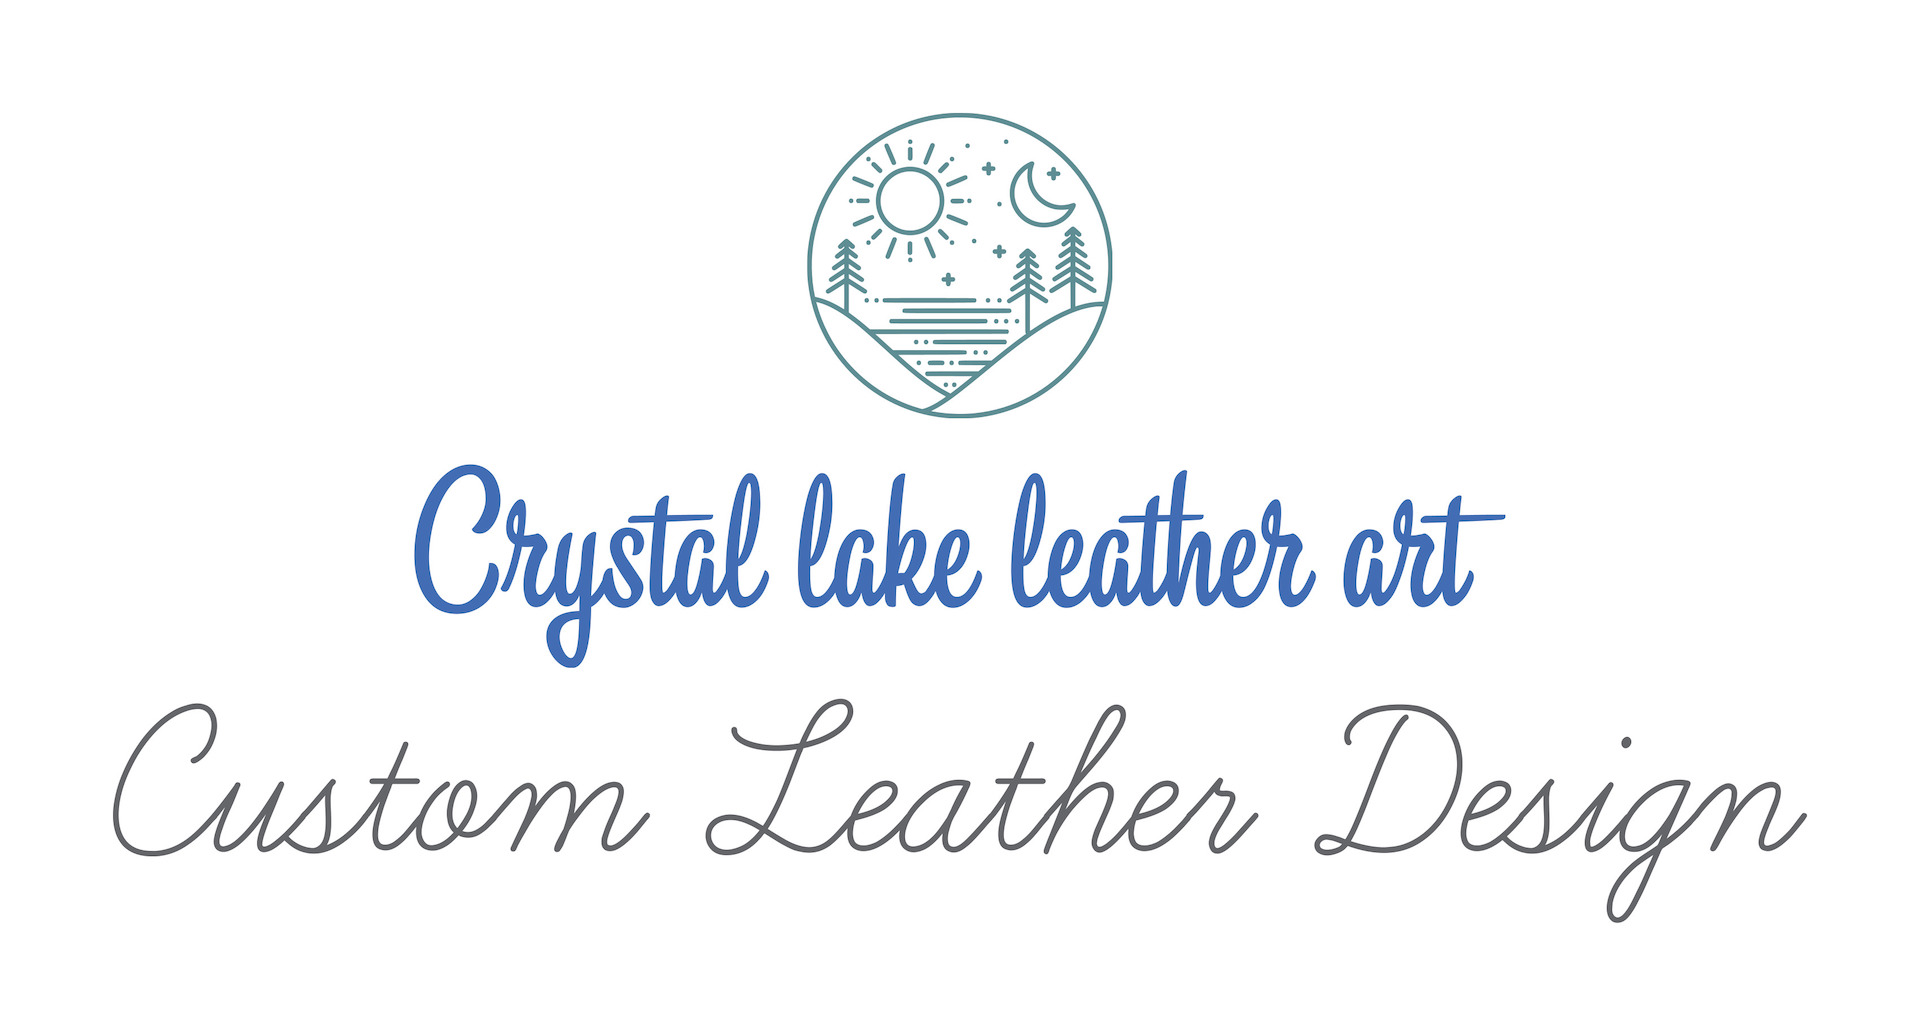 Custom handmade leather products